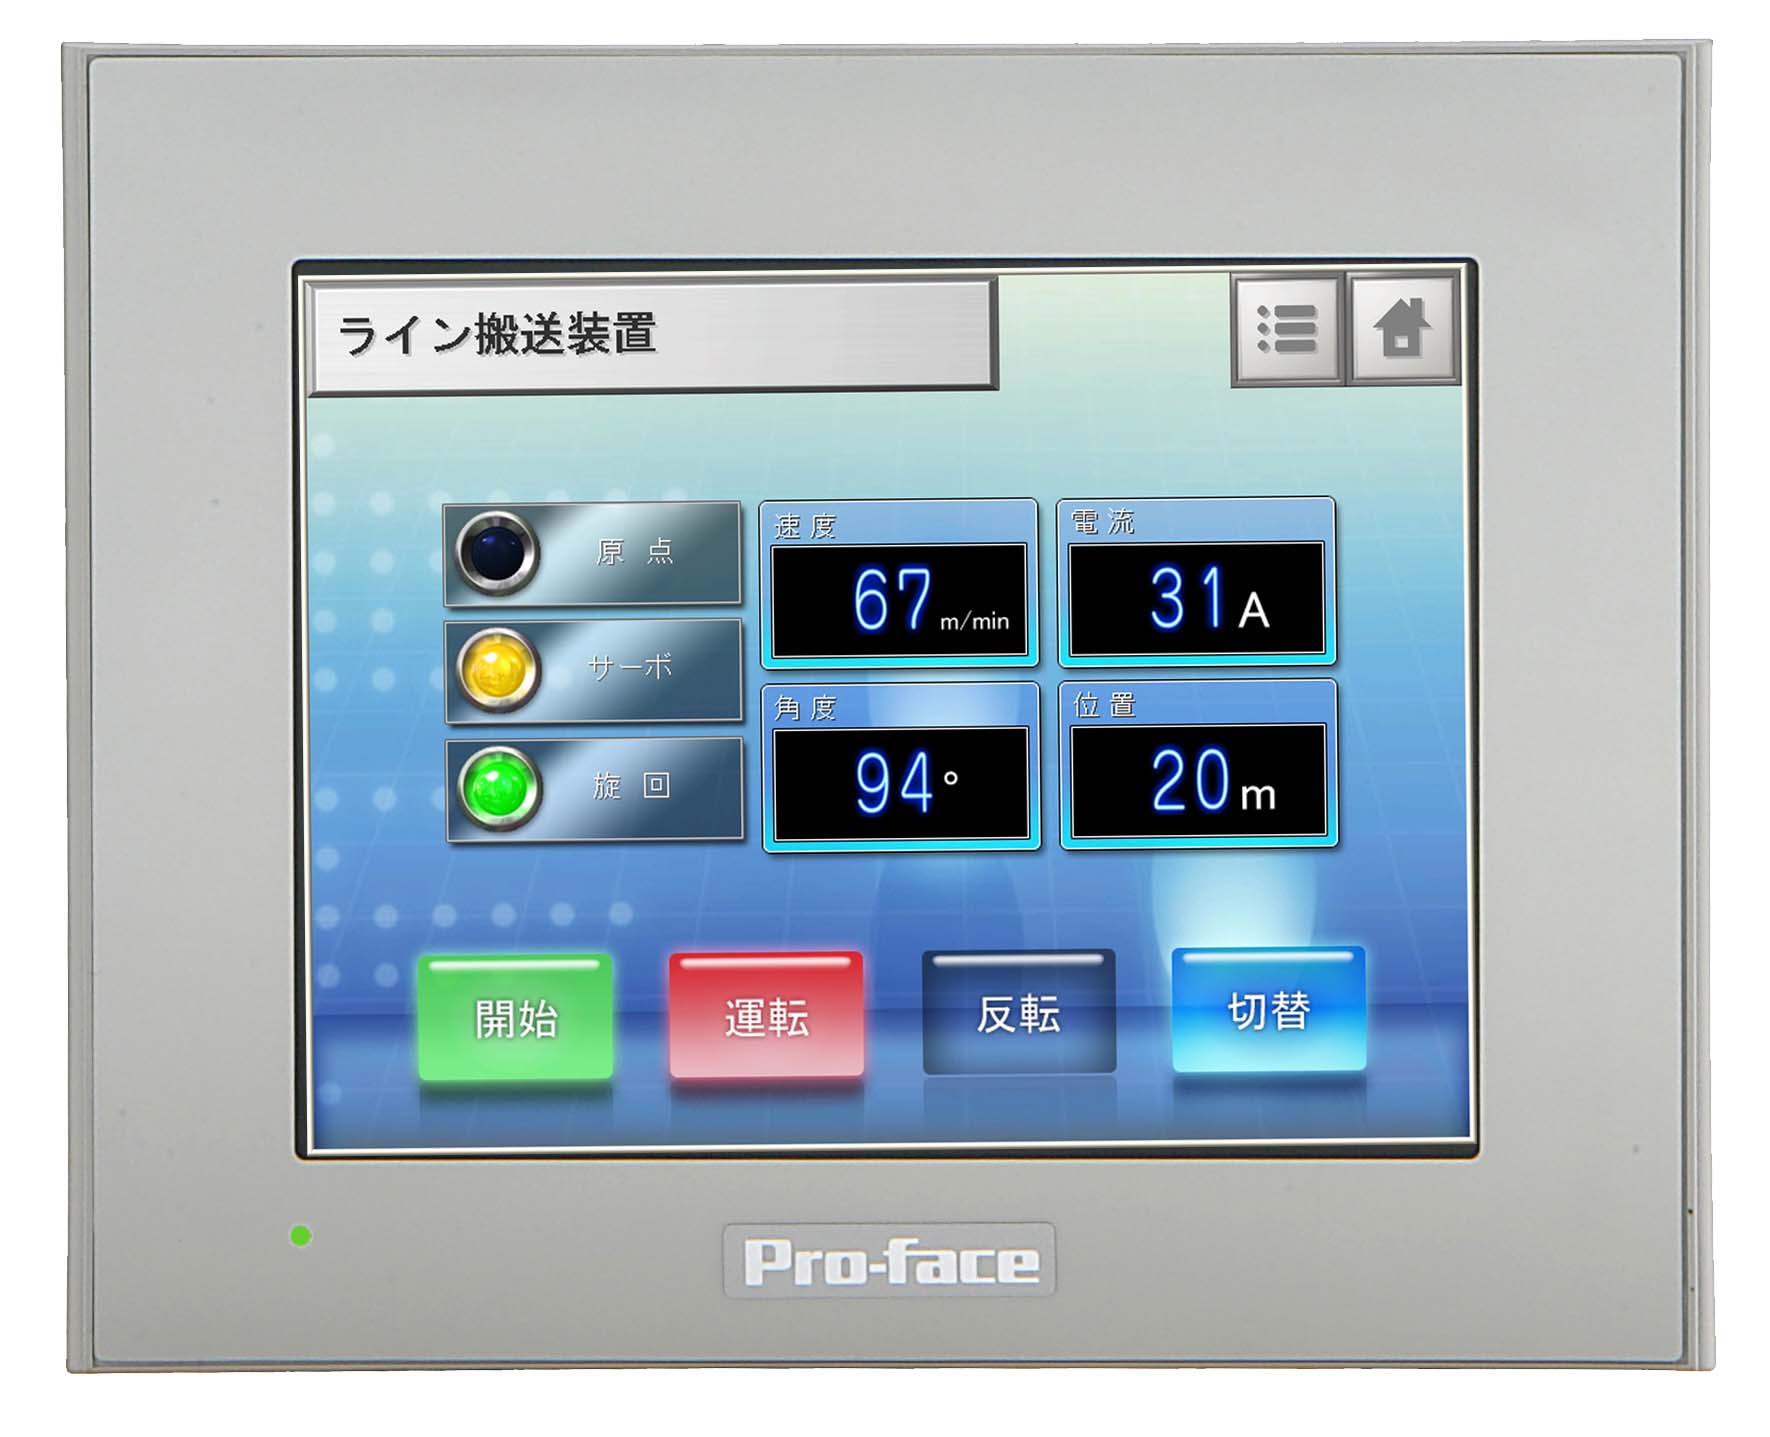 FA Control Equipment-Control Equipment-Display CoreStaff ONLINE 關於核友